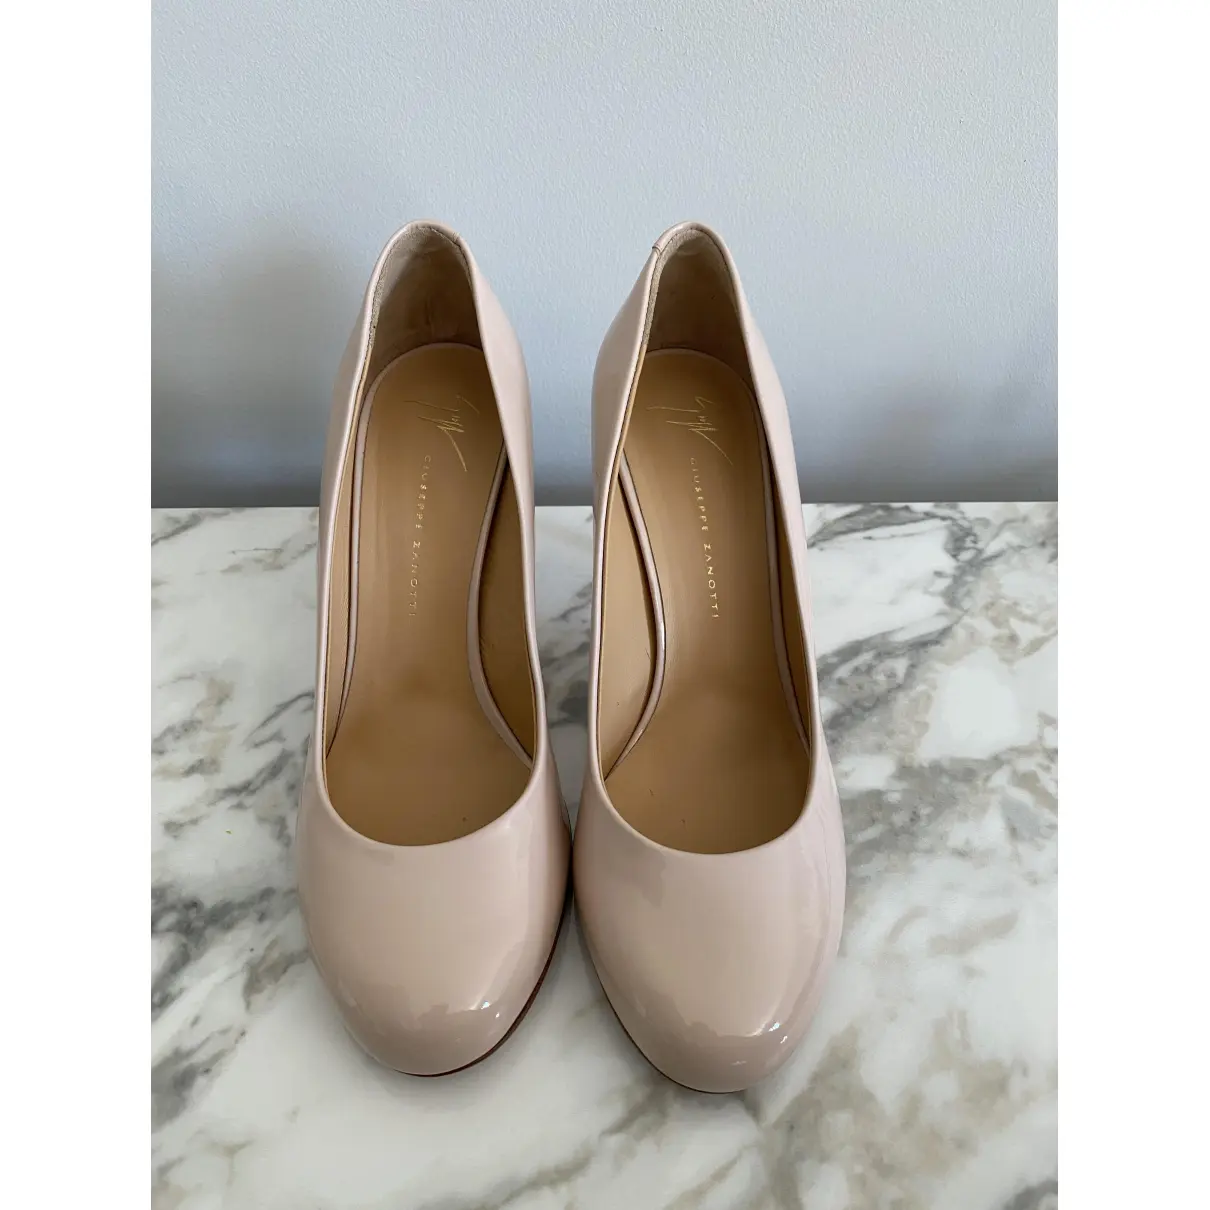 Buy Giuseppe Zanotti Patent leather heels online